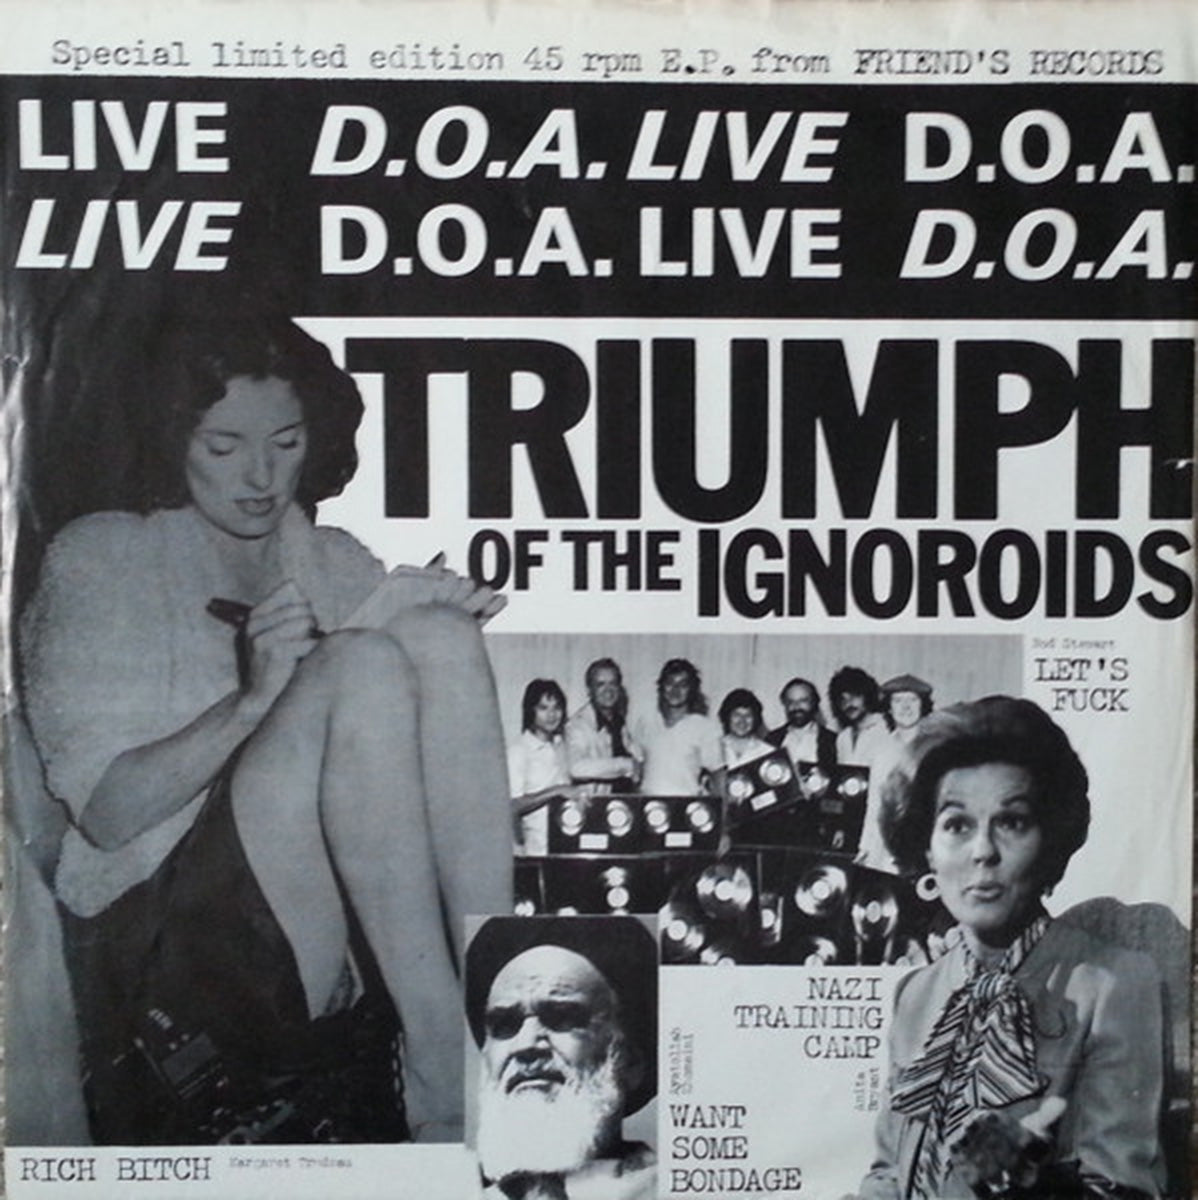 D.O.A. – Triumph Of The Ignoroids  - 1979 Rare